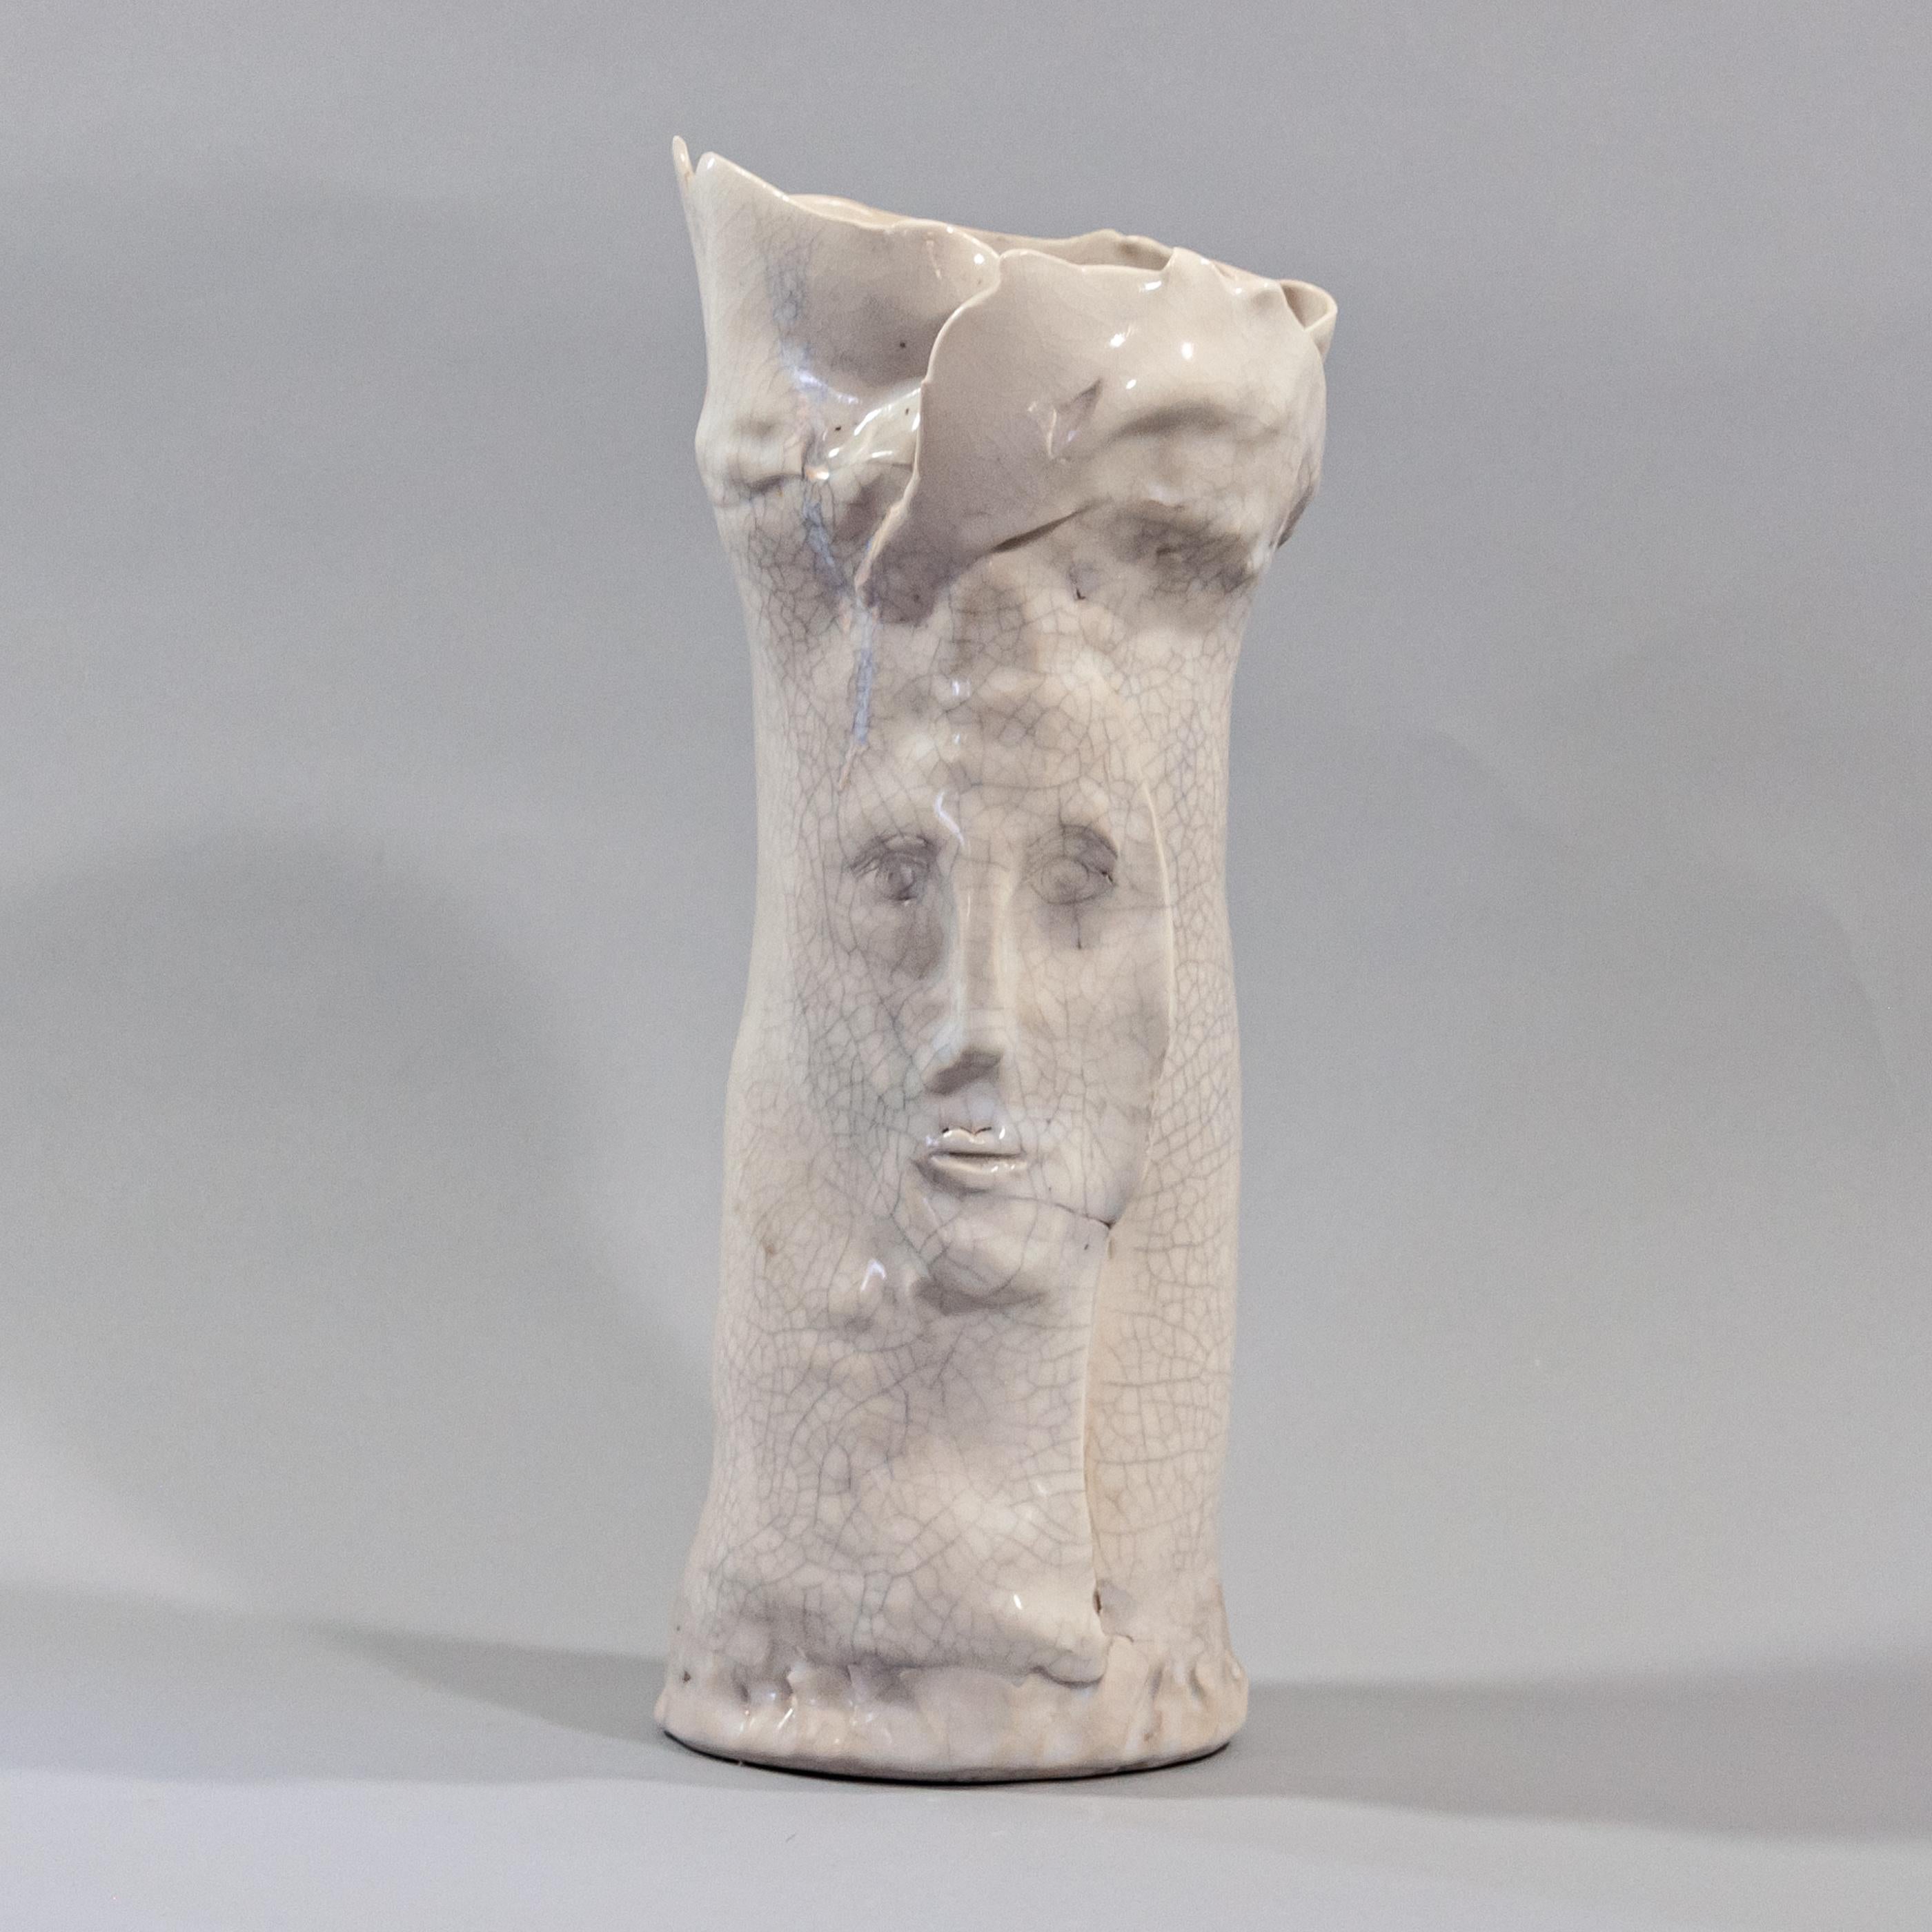 White porcelain vase with face #1